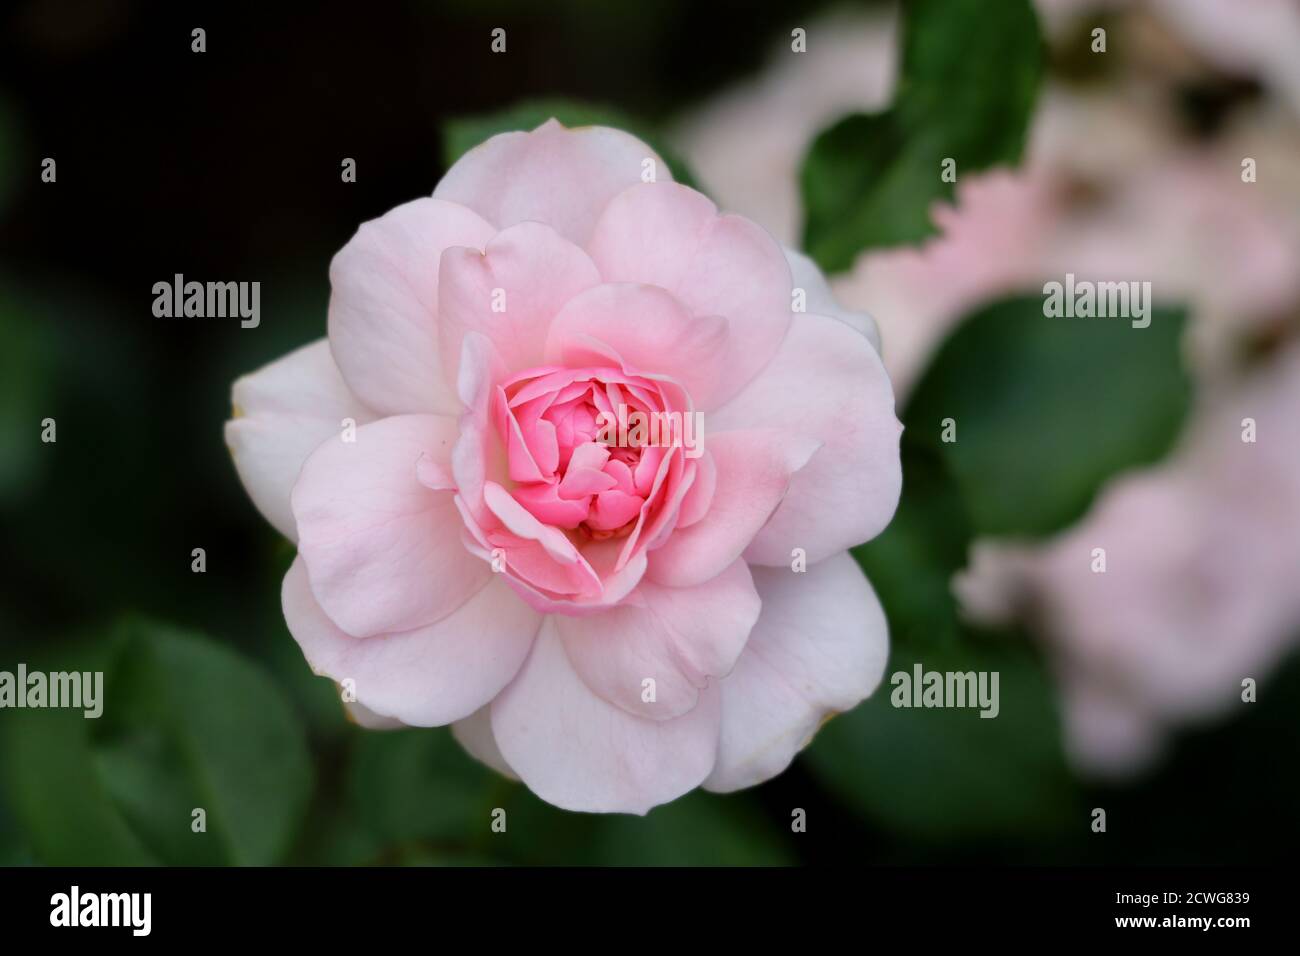 pink rose Bonica 82 macro Stock Photo